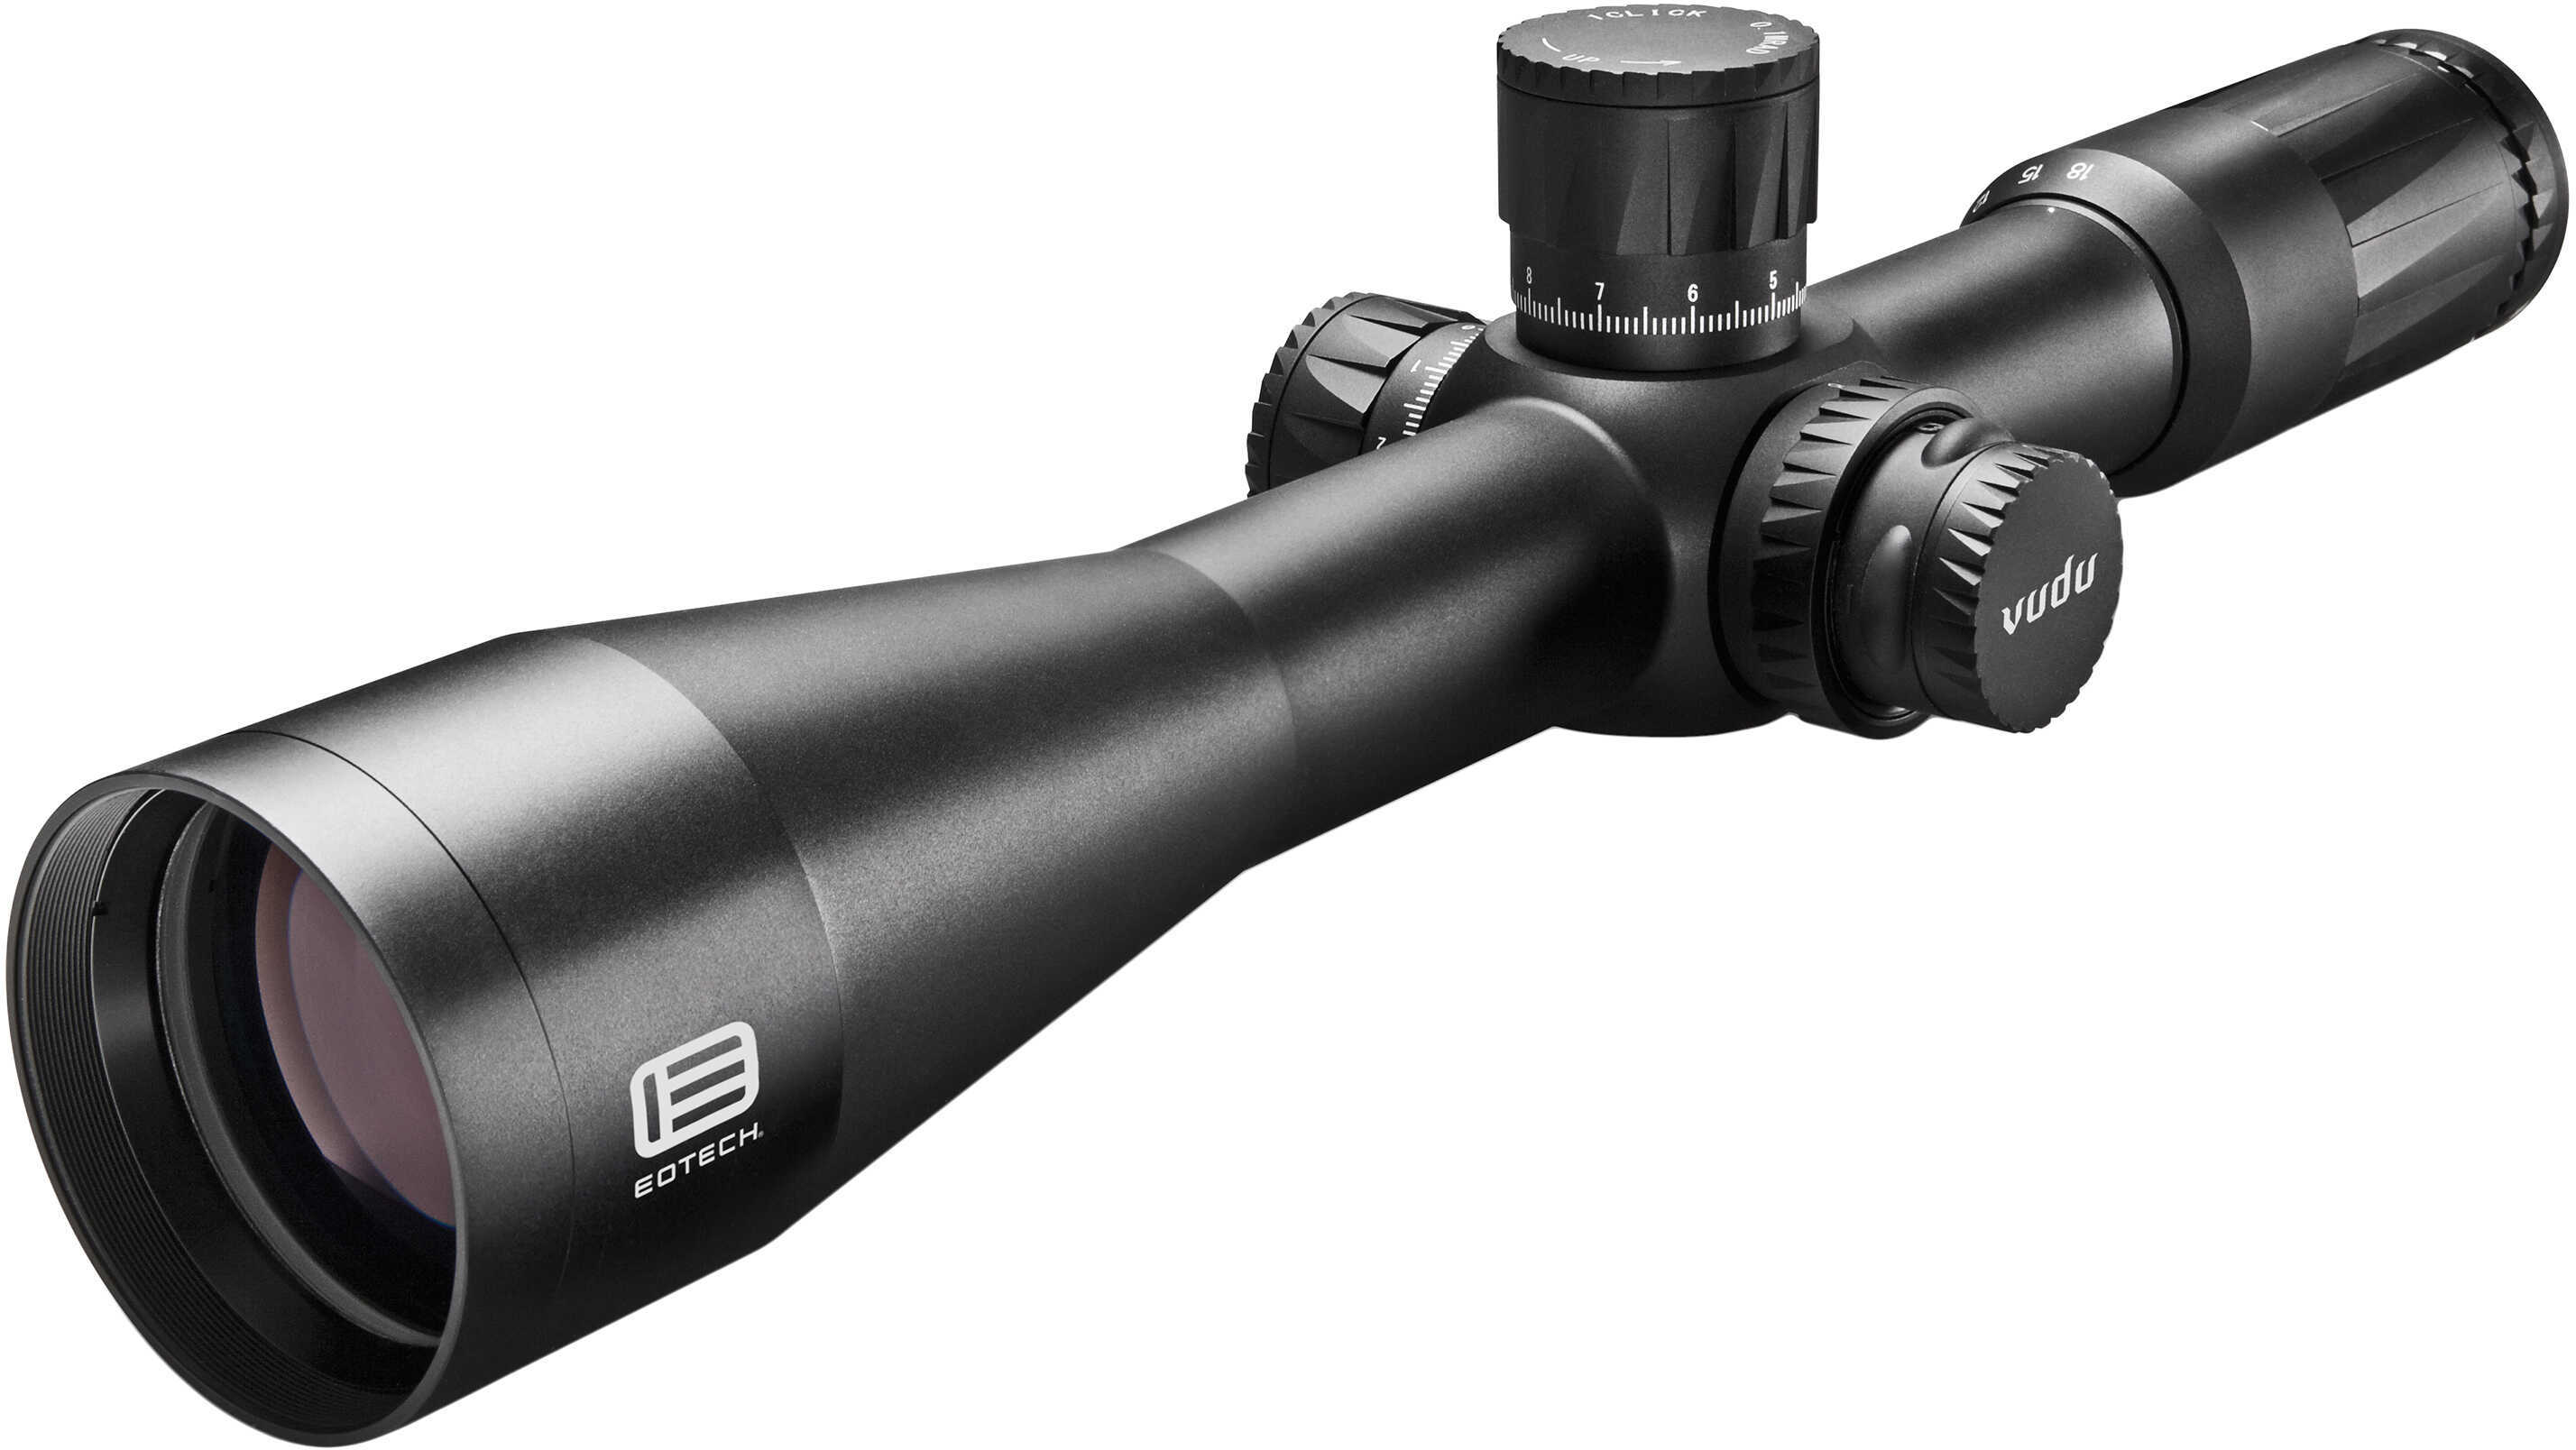 EOTech Vudu FFP Rifle Scope Black 3.5-18x50mm MD1 Reticle MRAD